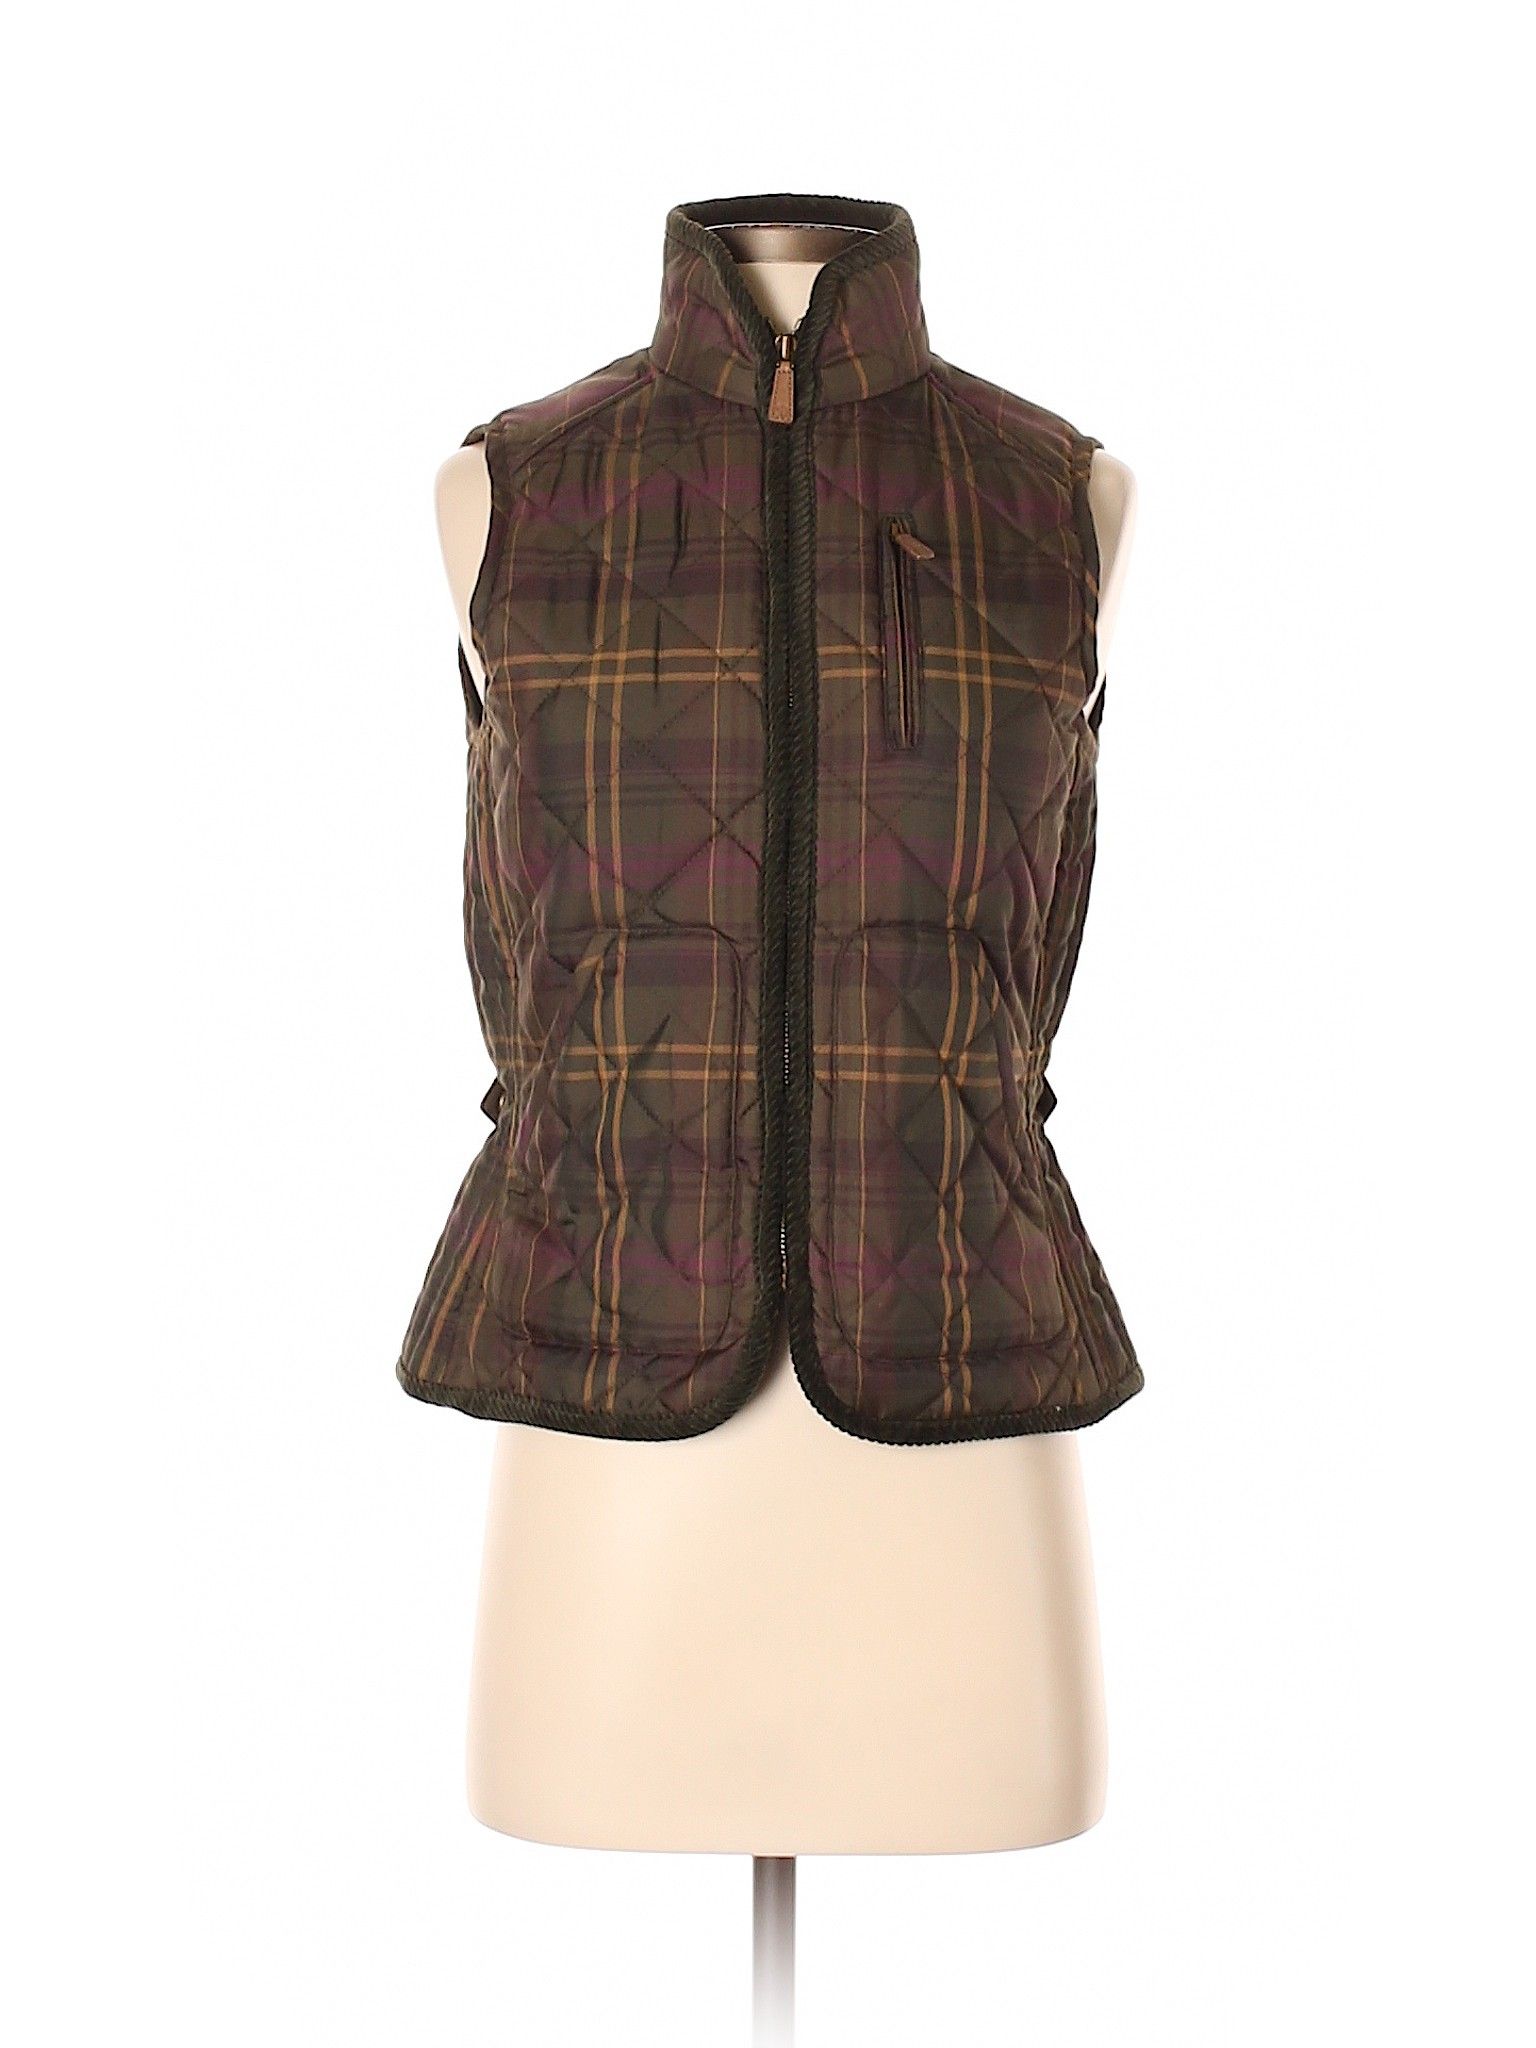 Lauren by Ralph Lauren Vest Size 4: Green Women's Jackets & Outerwear - 46942061 | thredUP